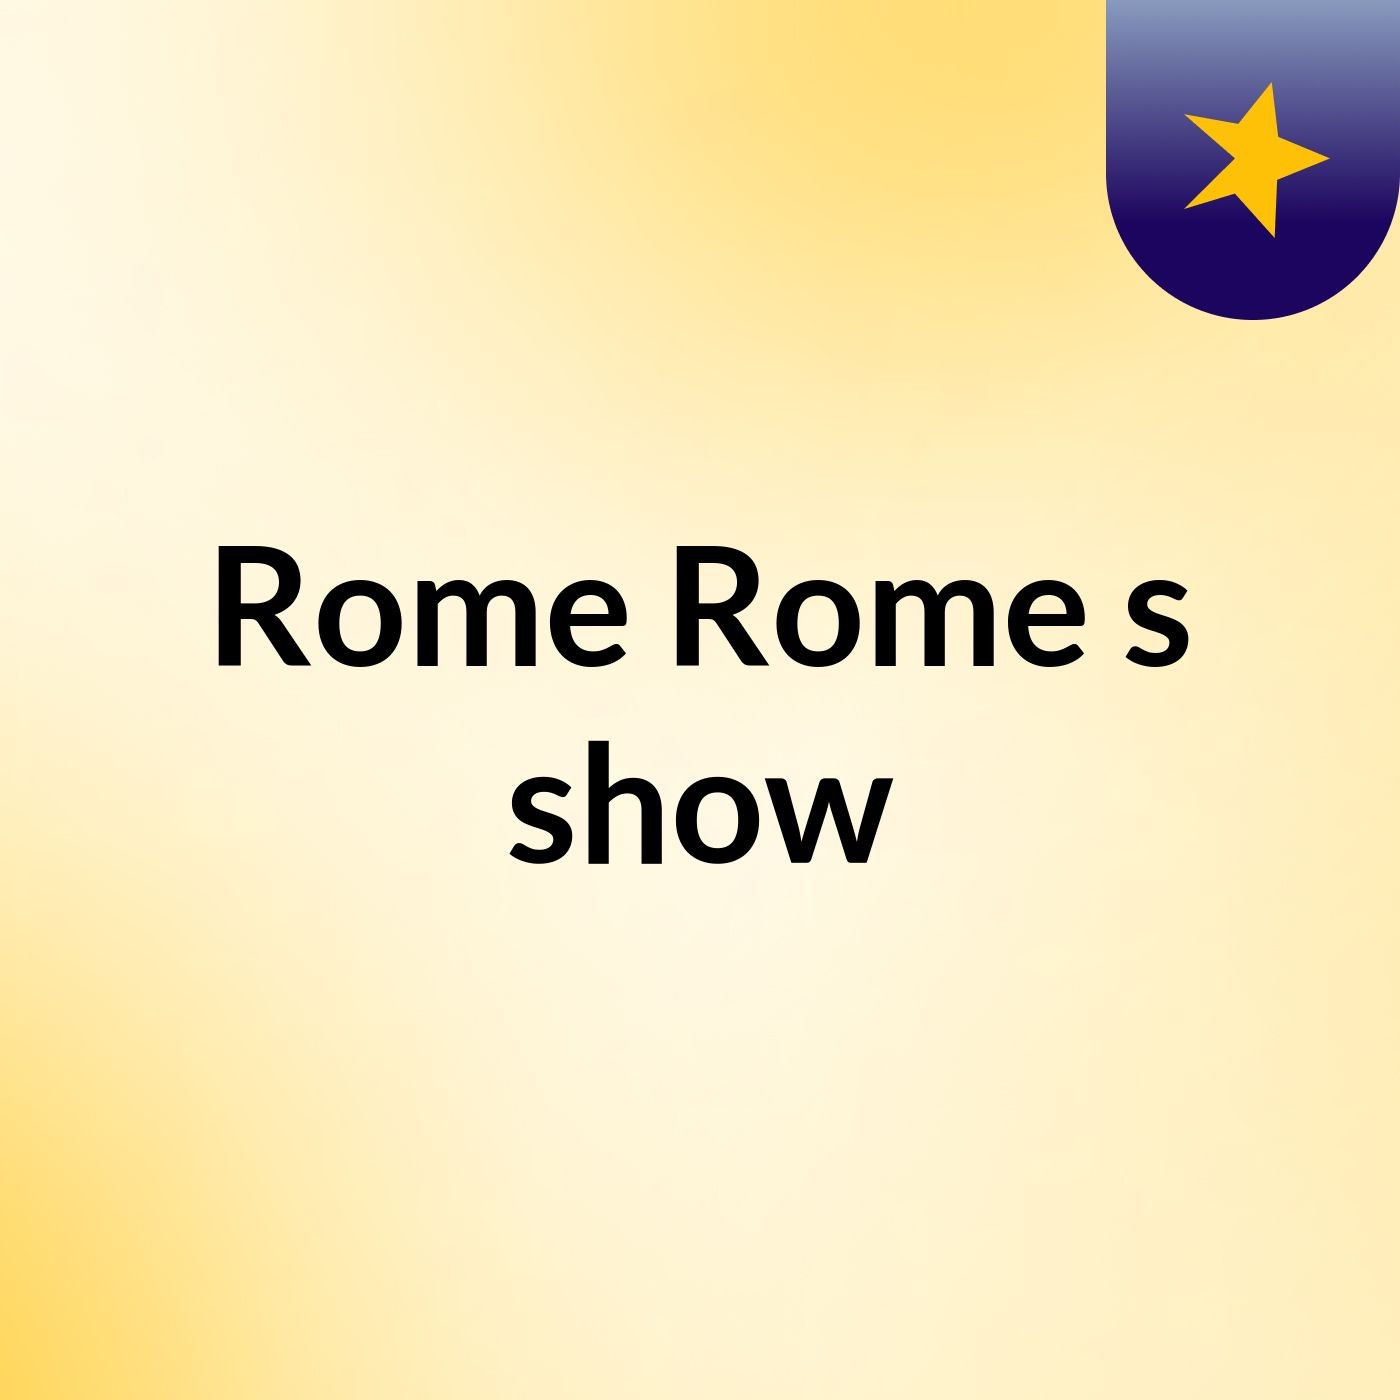 Rome Rome's show